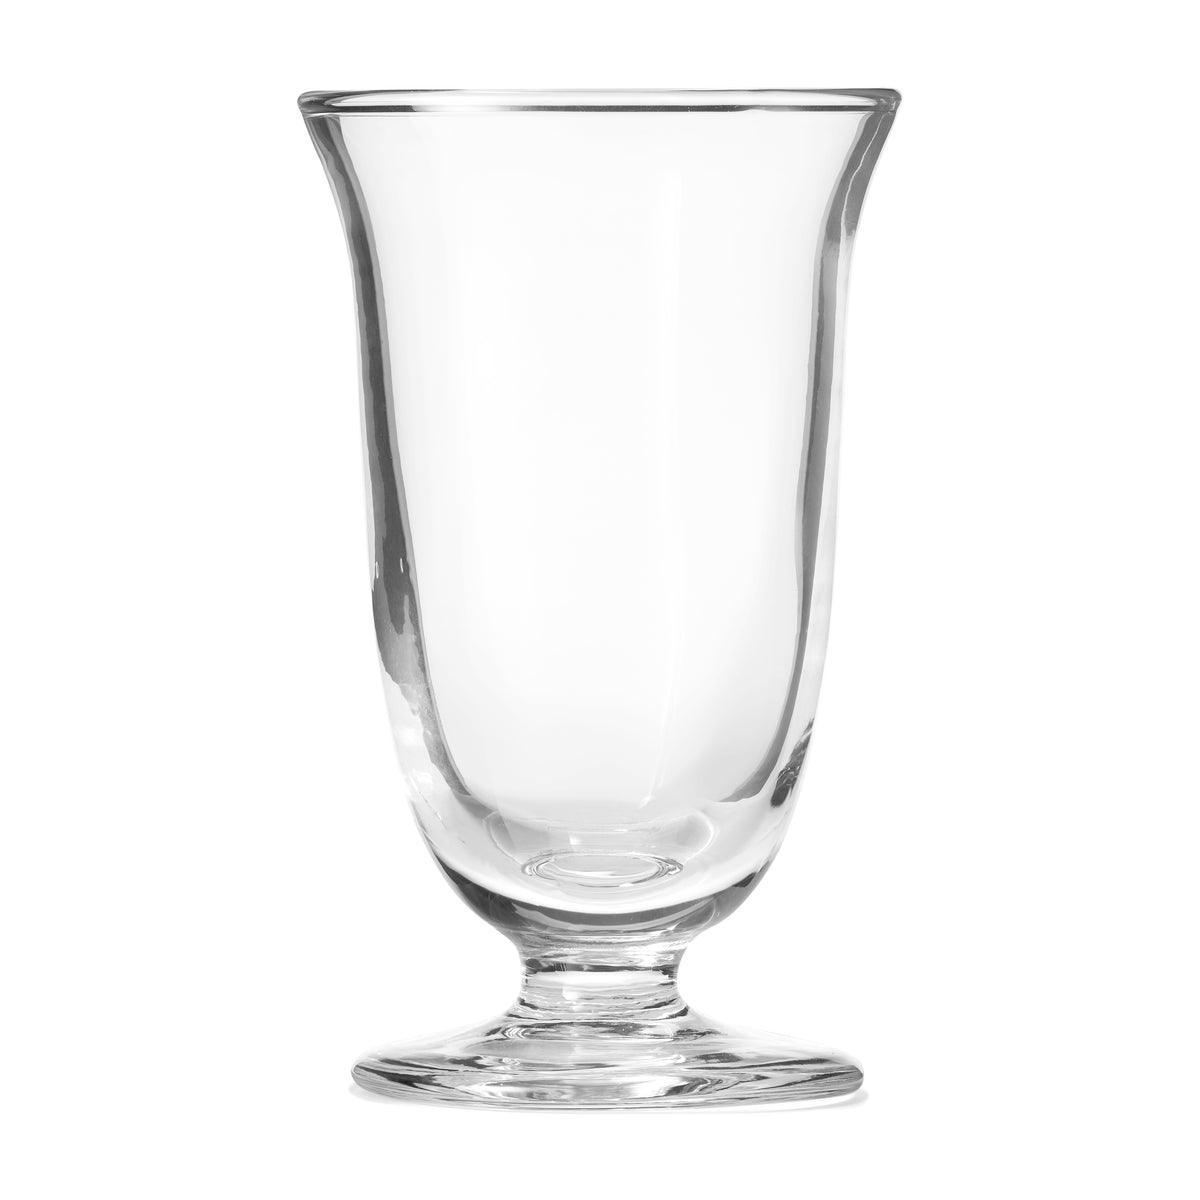 Fioara Wine Glass, Set of 2 in Clear